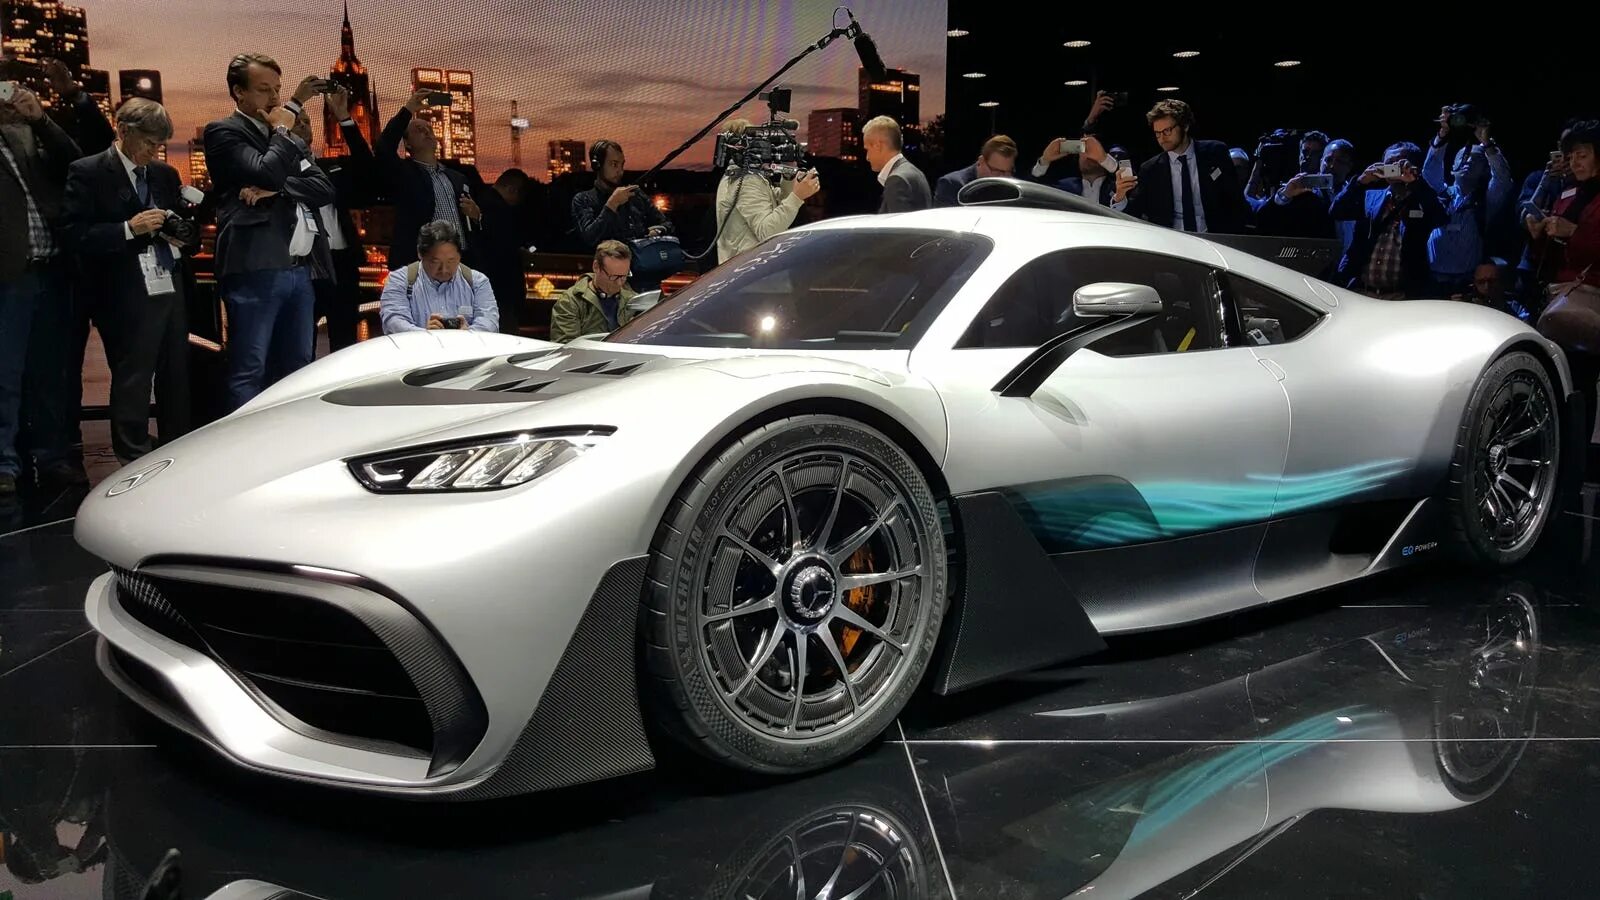 Avto 1000. Мерседес AMG Project one 2023. Mercedes Project one 2022. Суперкар концепт будущего.